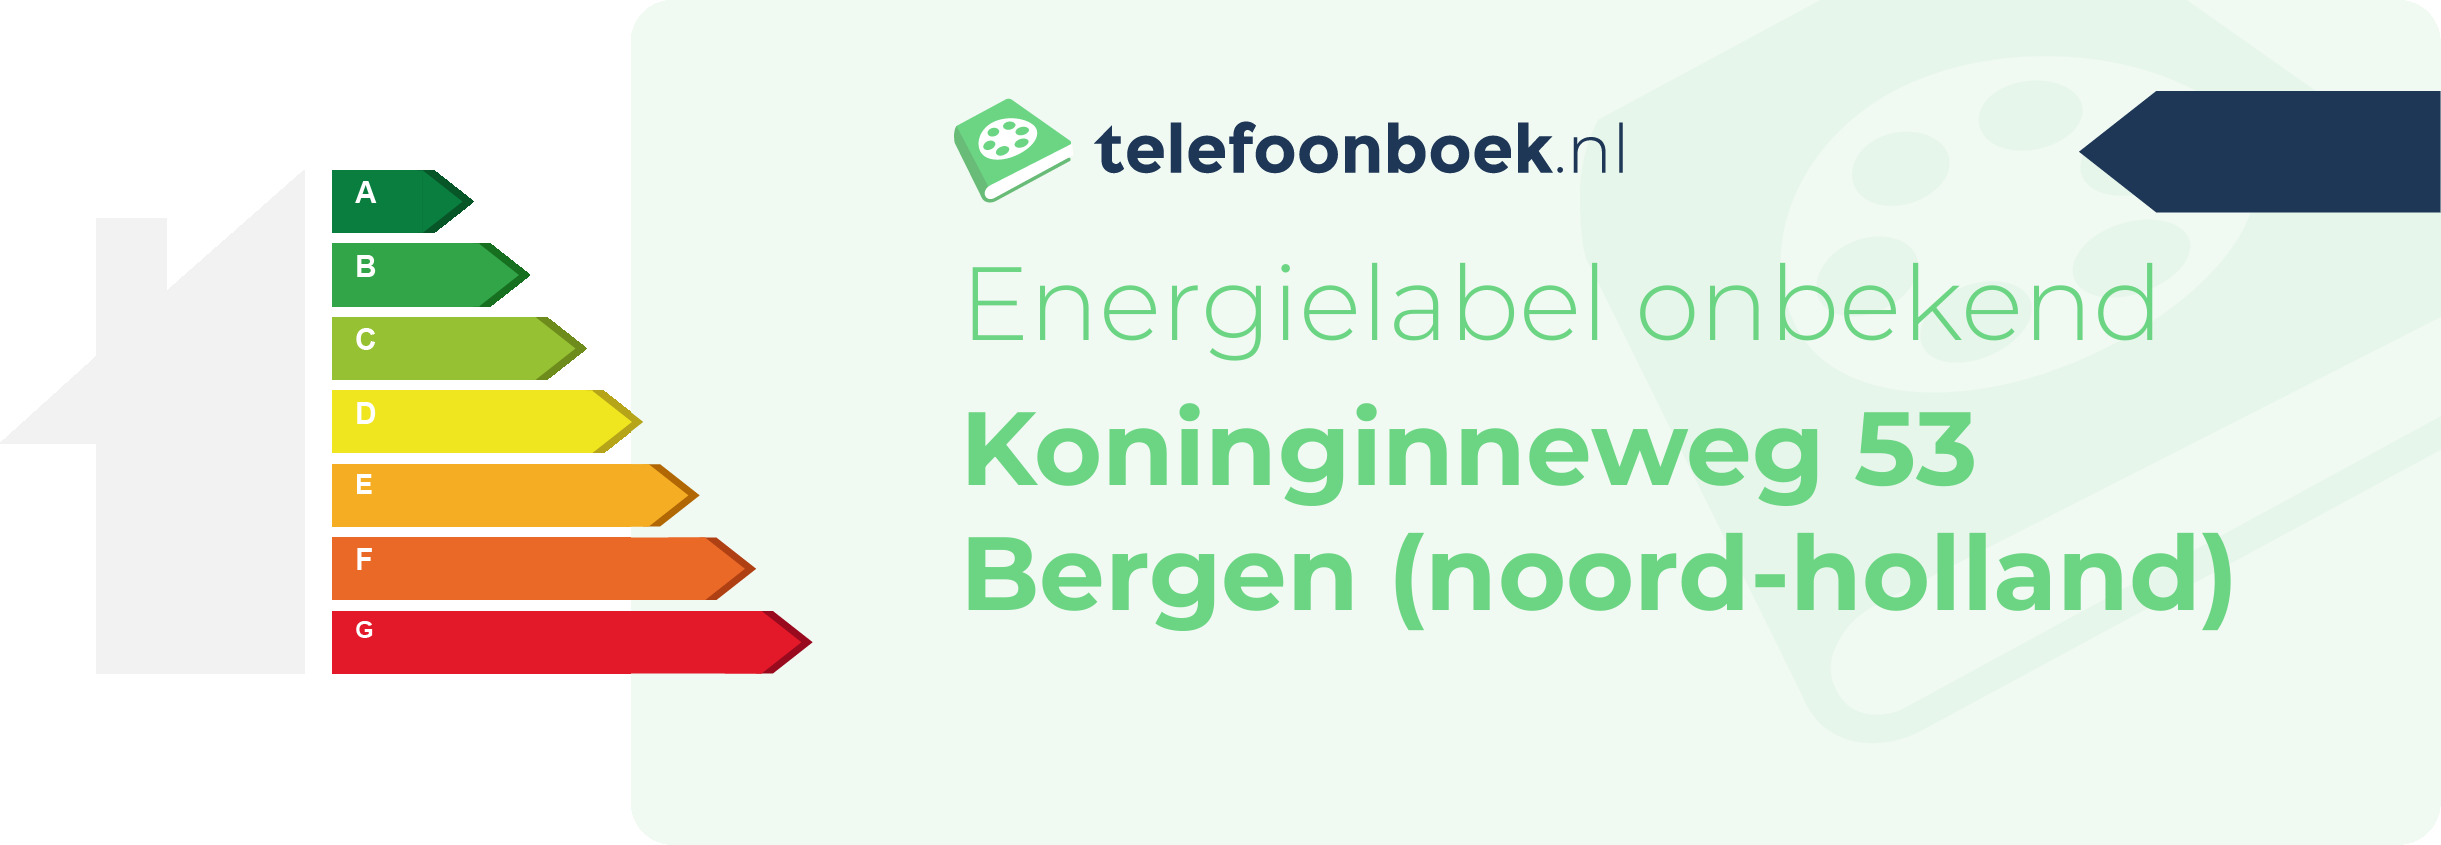 Energielabel Koninginneweg 53 Bergen (Noord-Holland)